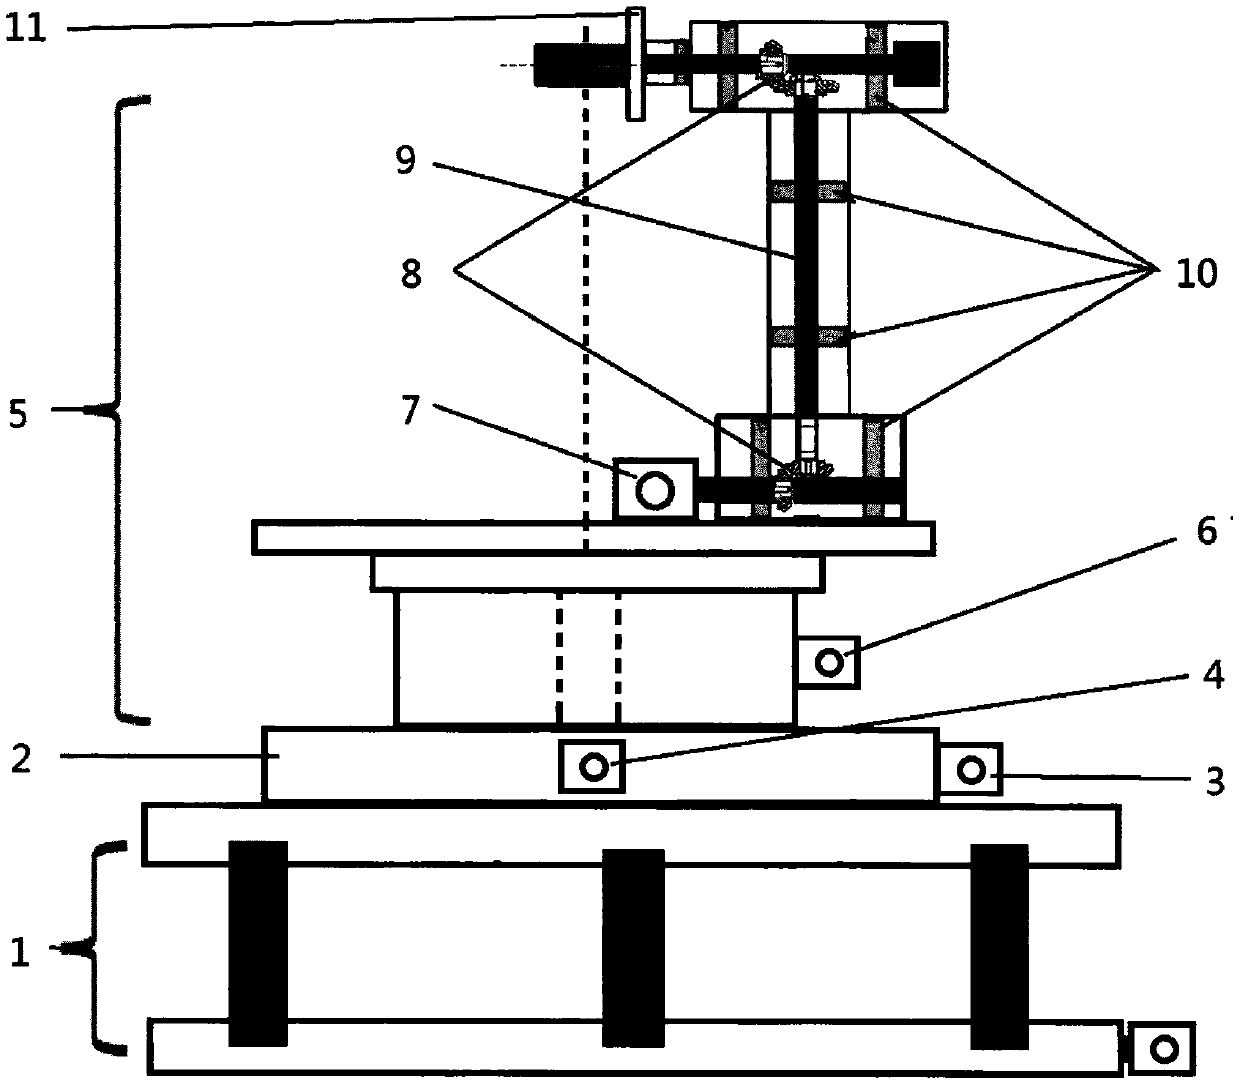 Novel positioning rotating table used for OTA testing